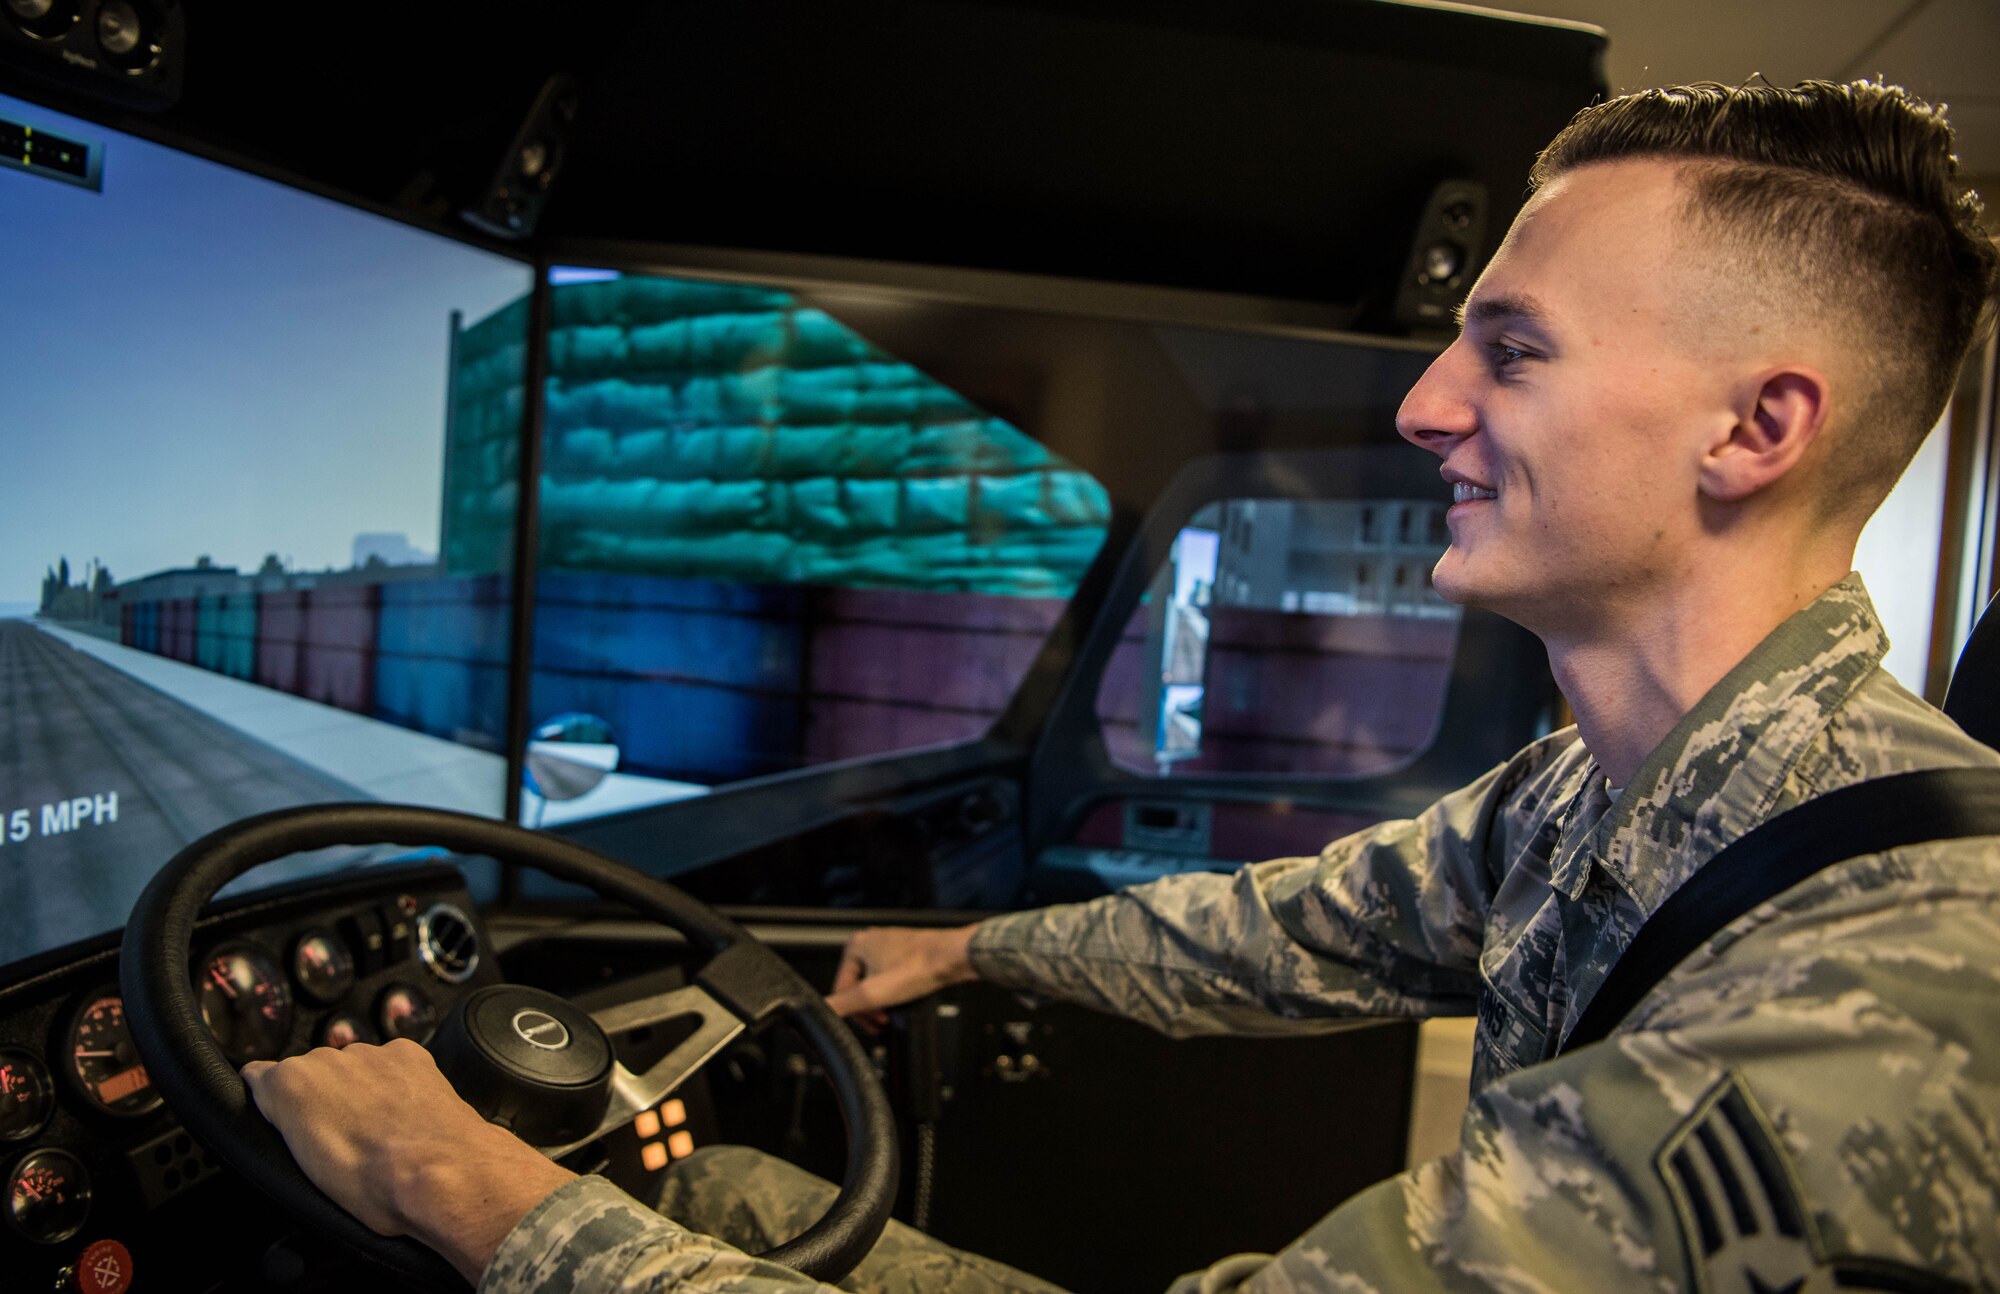 Airman driving on simulator